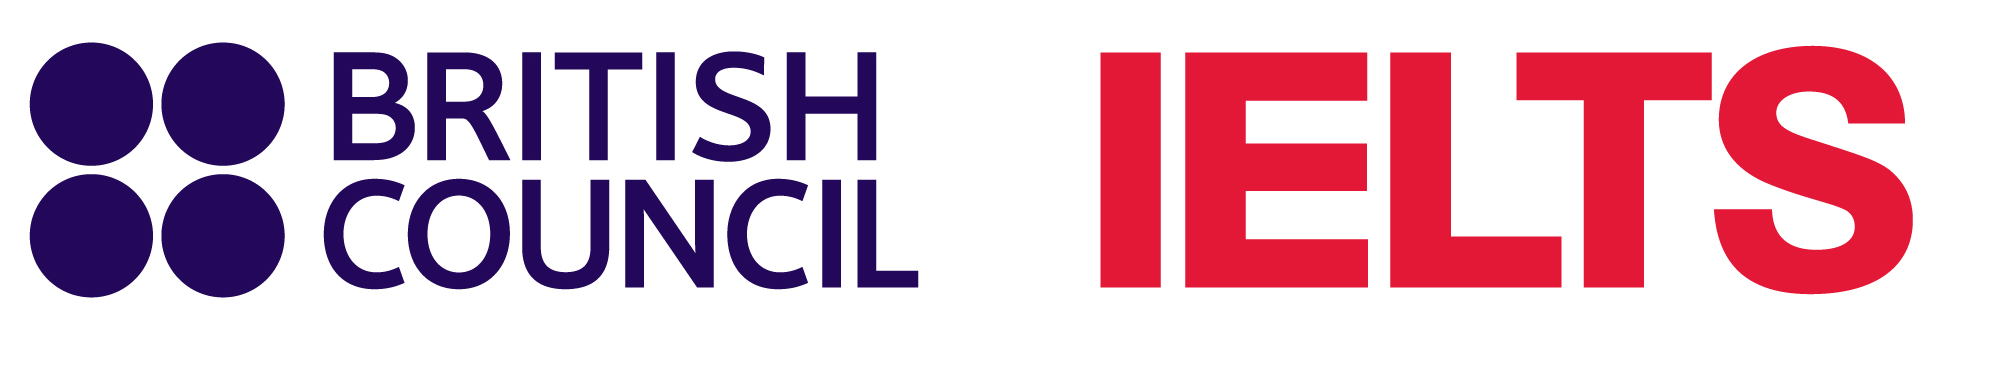 British Council and IELTS logos